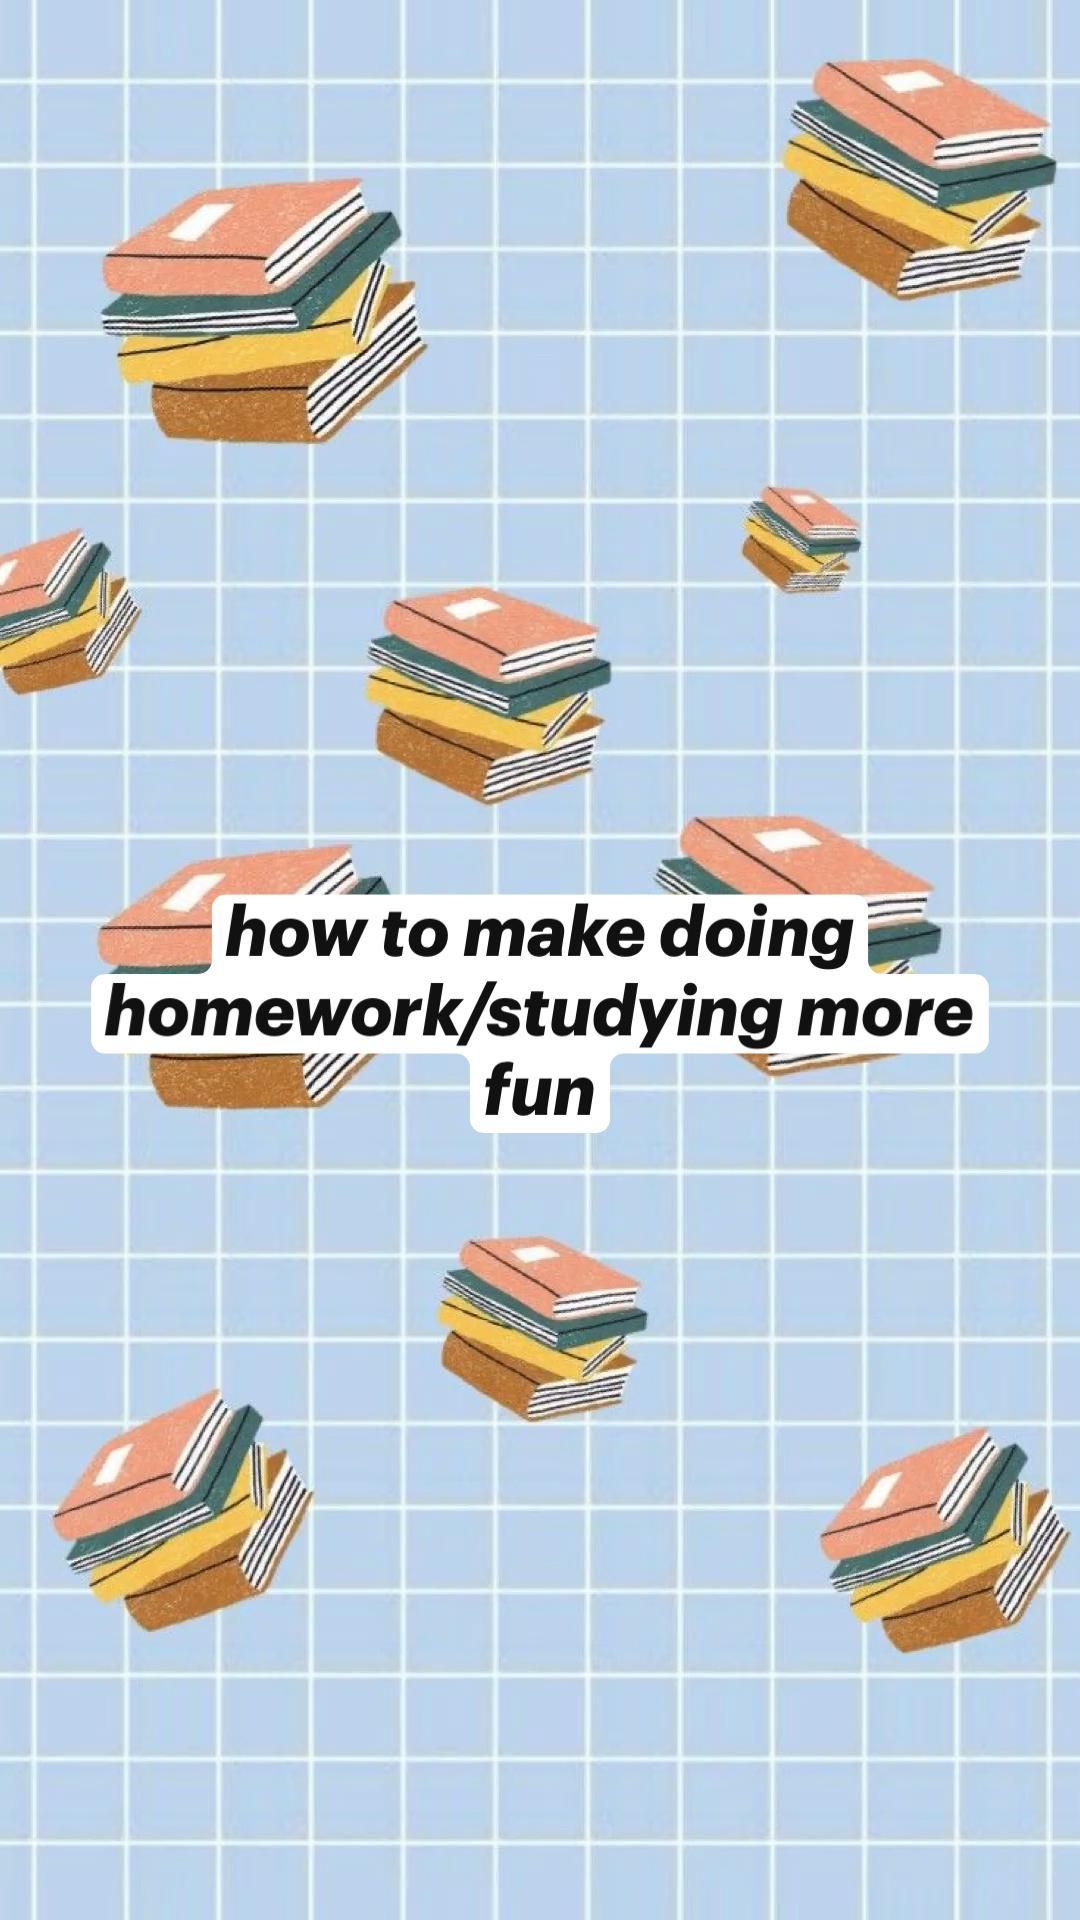 How to make doing homework/studying more fun - Study